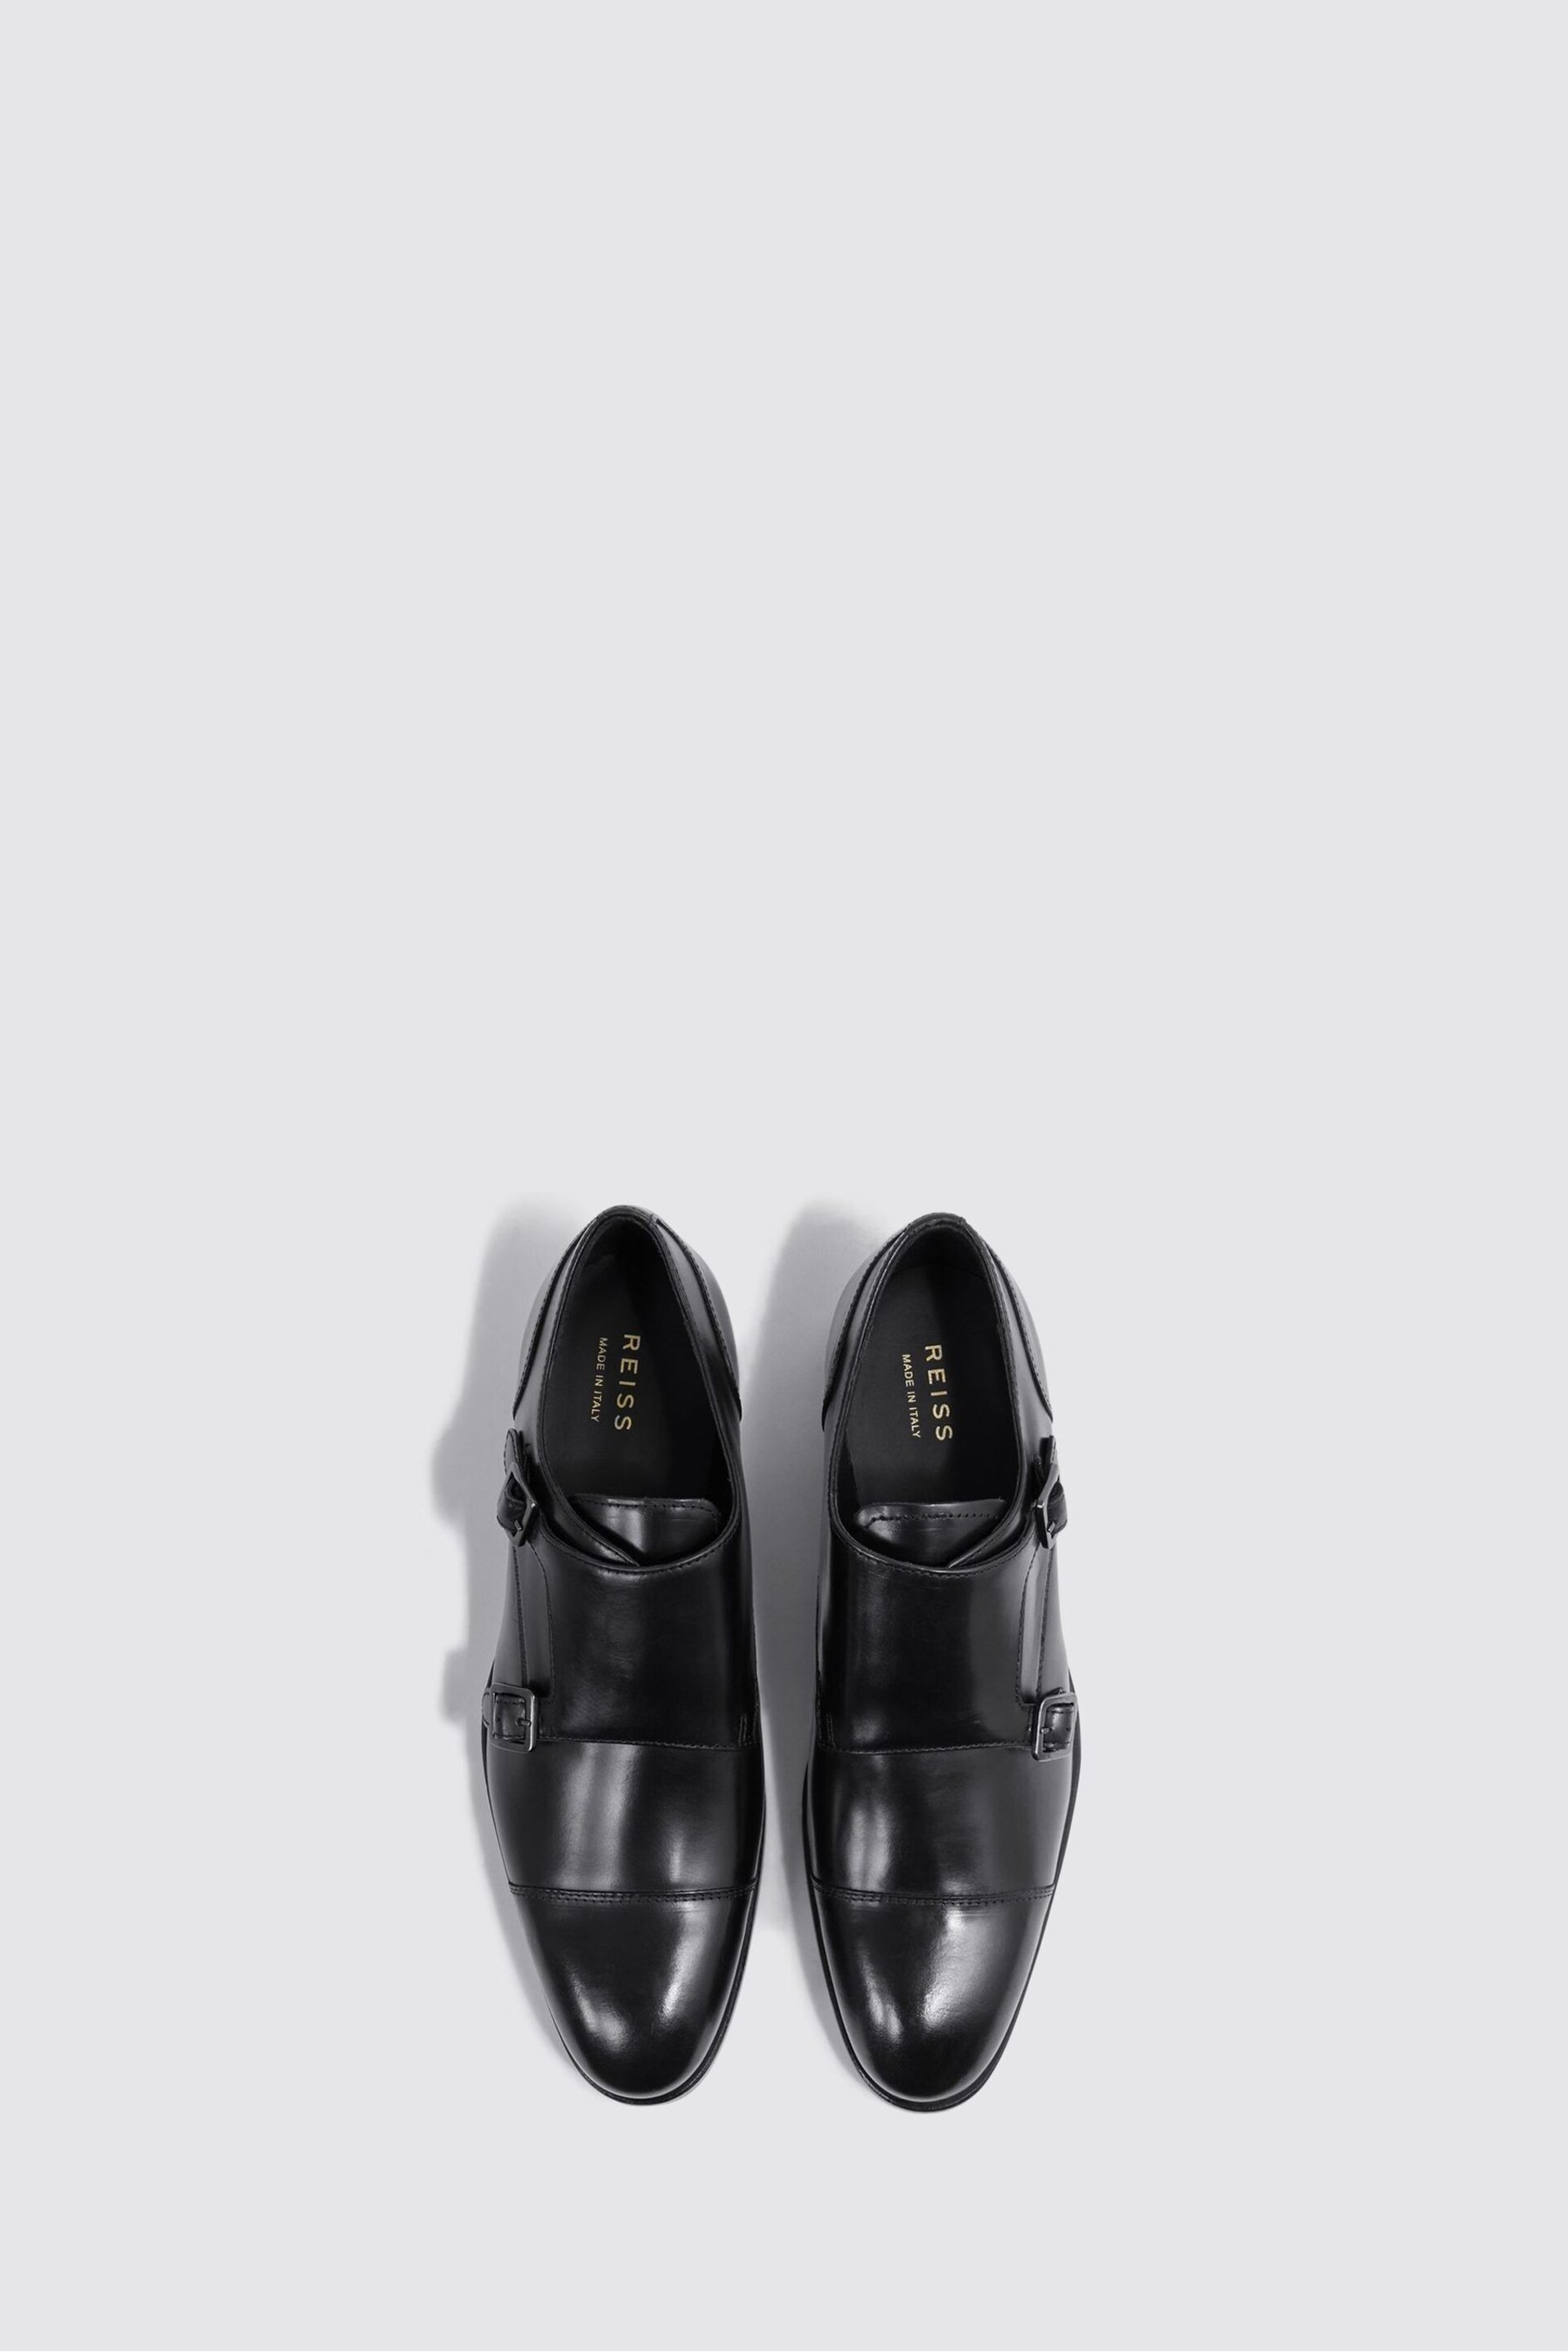 Reiss Black/Gunmetal Rivington Leather Monk Strap Shoes - Image 4 of 6